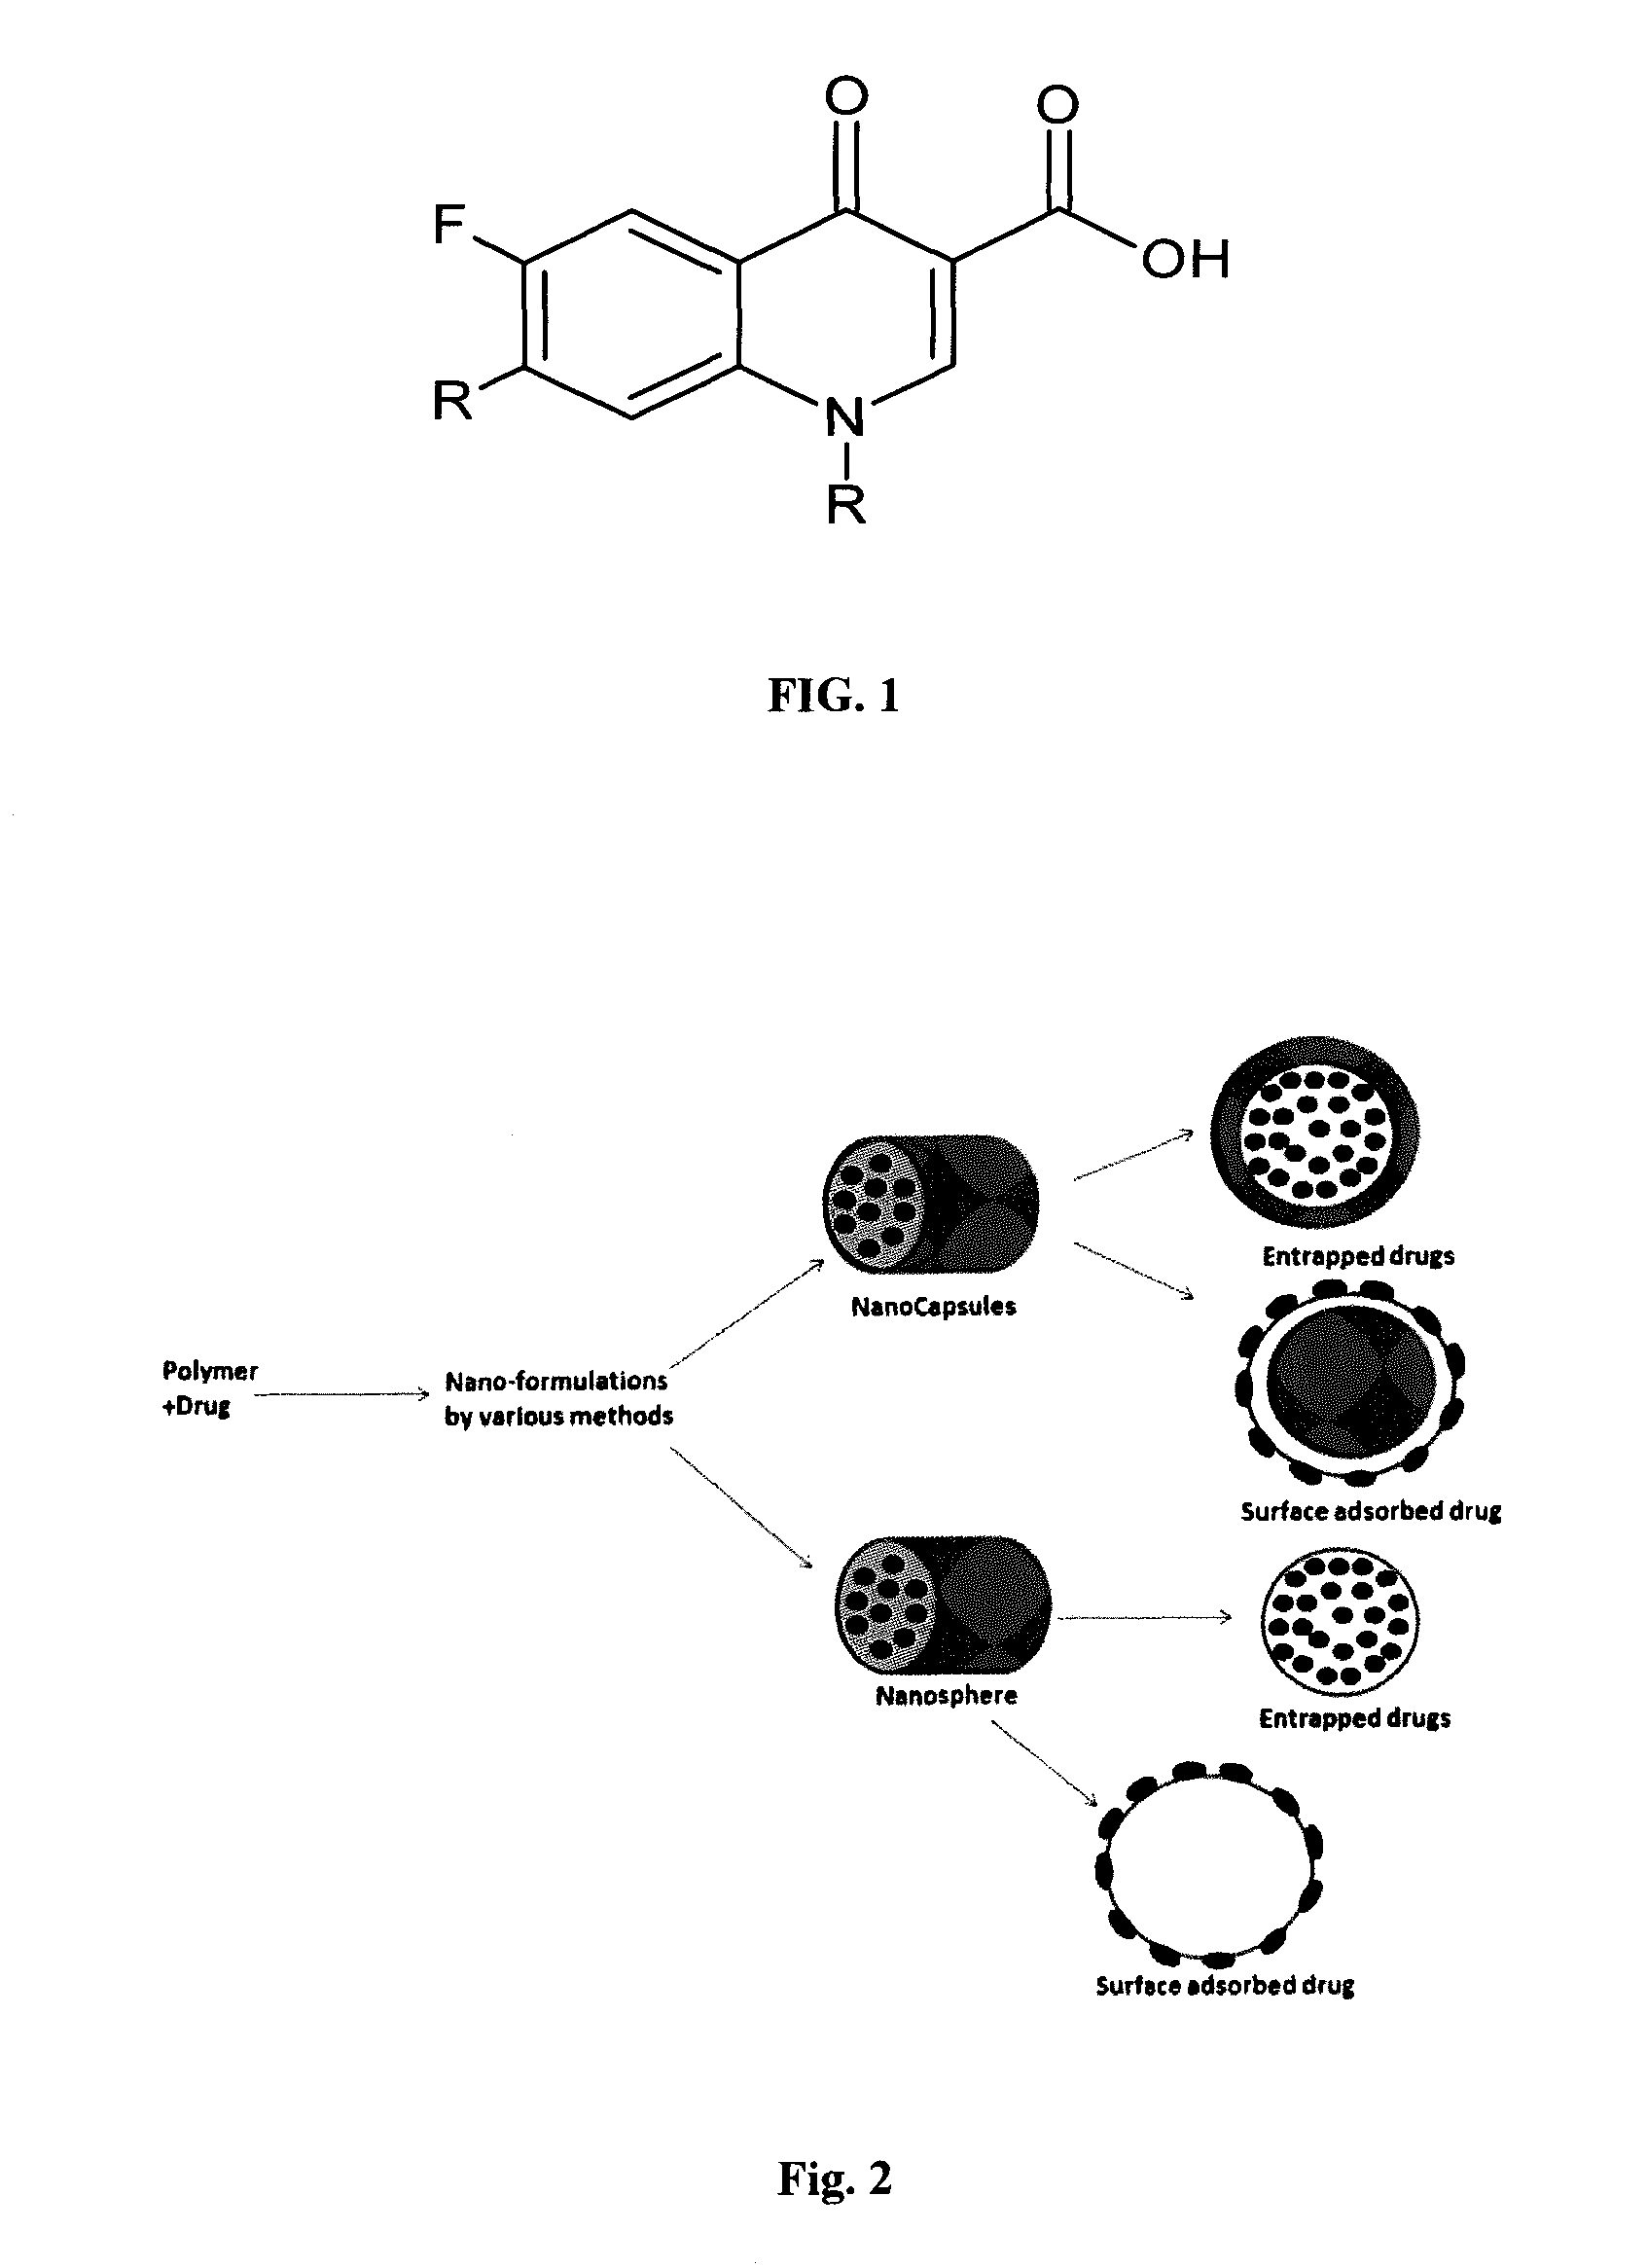 Ciprofloxacin loaded diethylaminoethyl cellulose nanoparticles